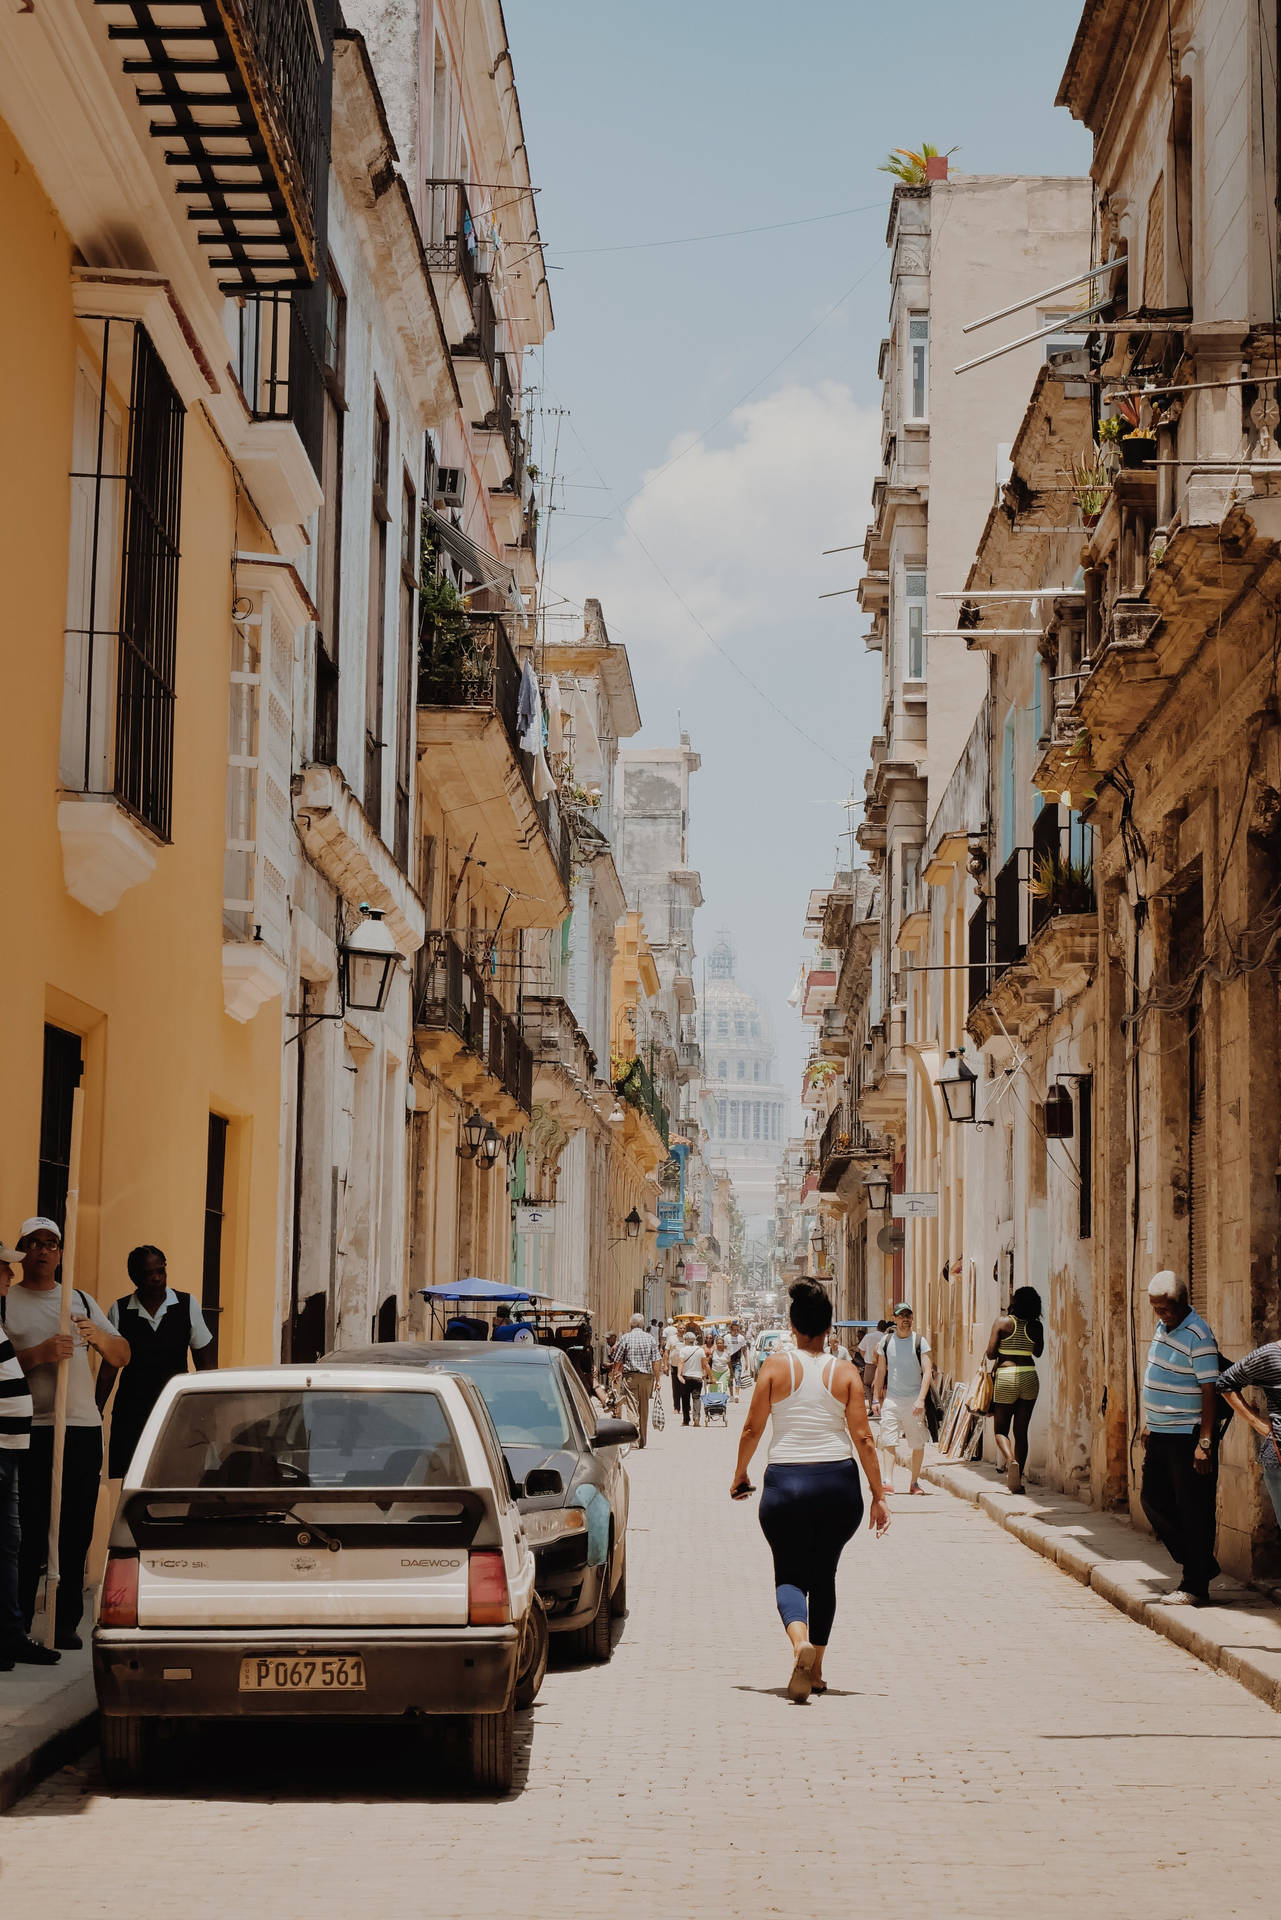 Havana Pedestrians Parked Cars Wallpaper